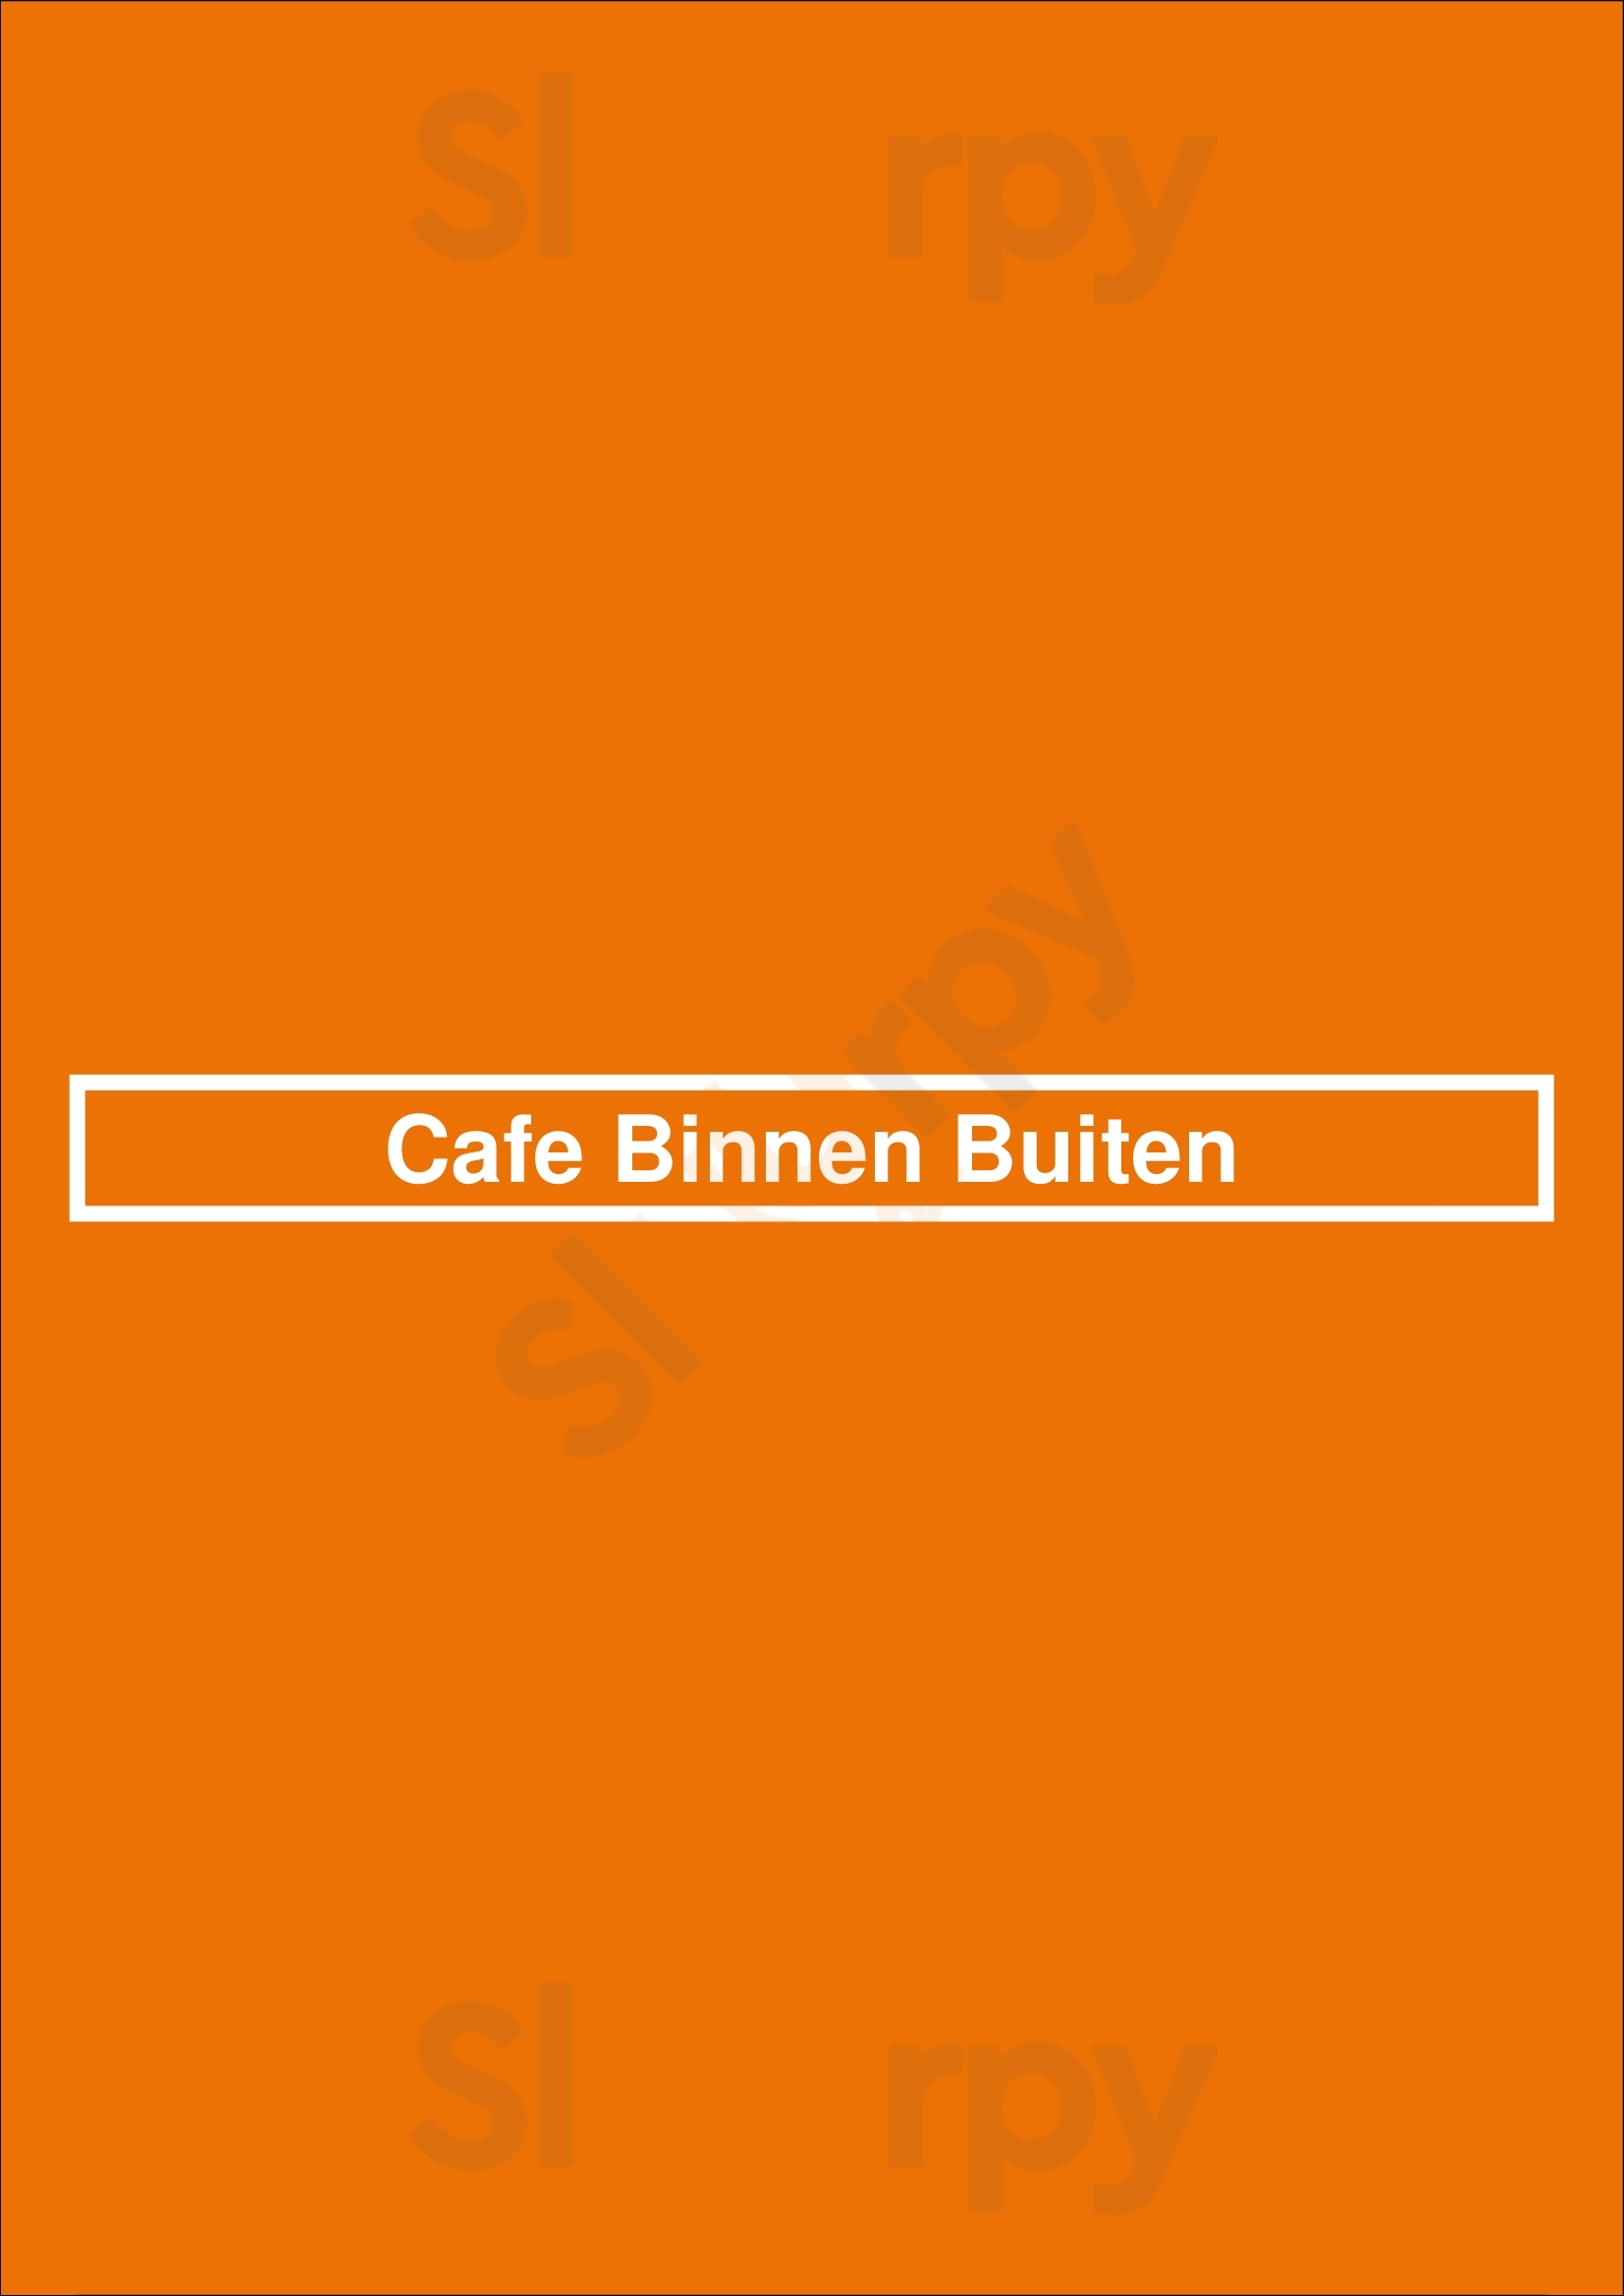 Cafe Binnen Buiten Amsterdam Menu - 1